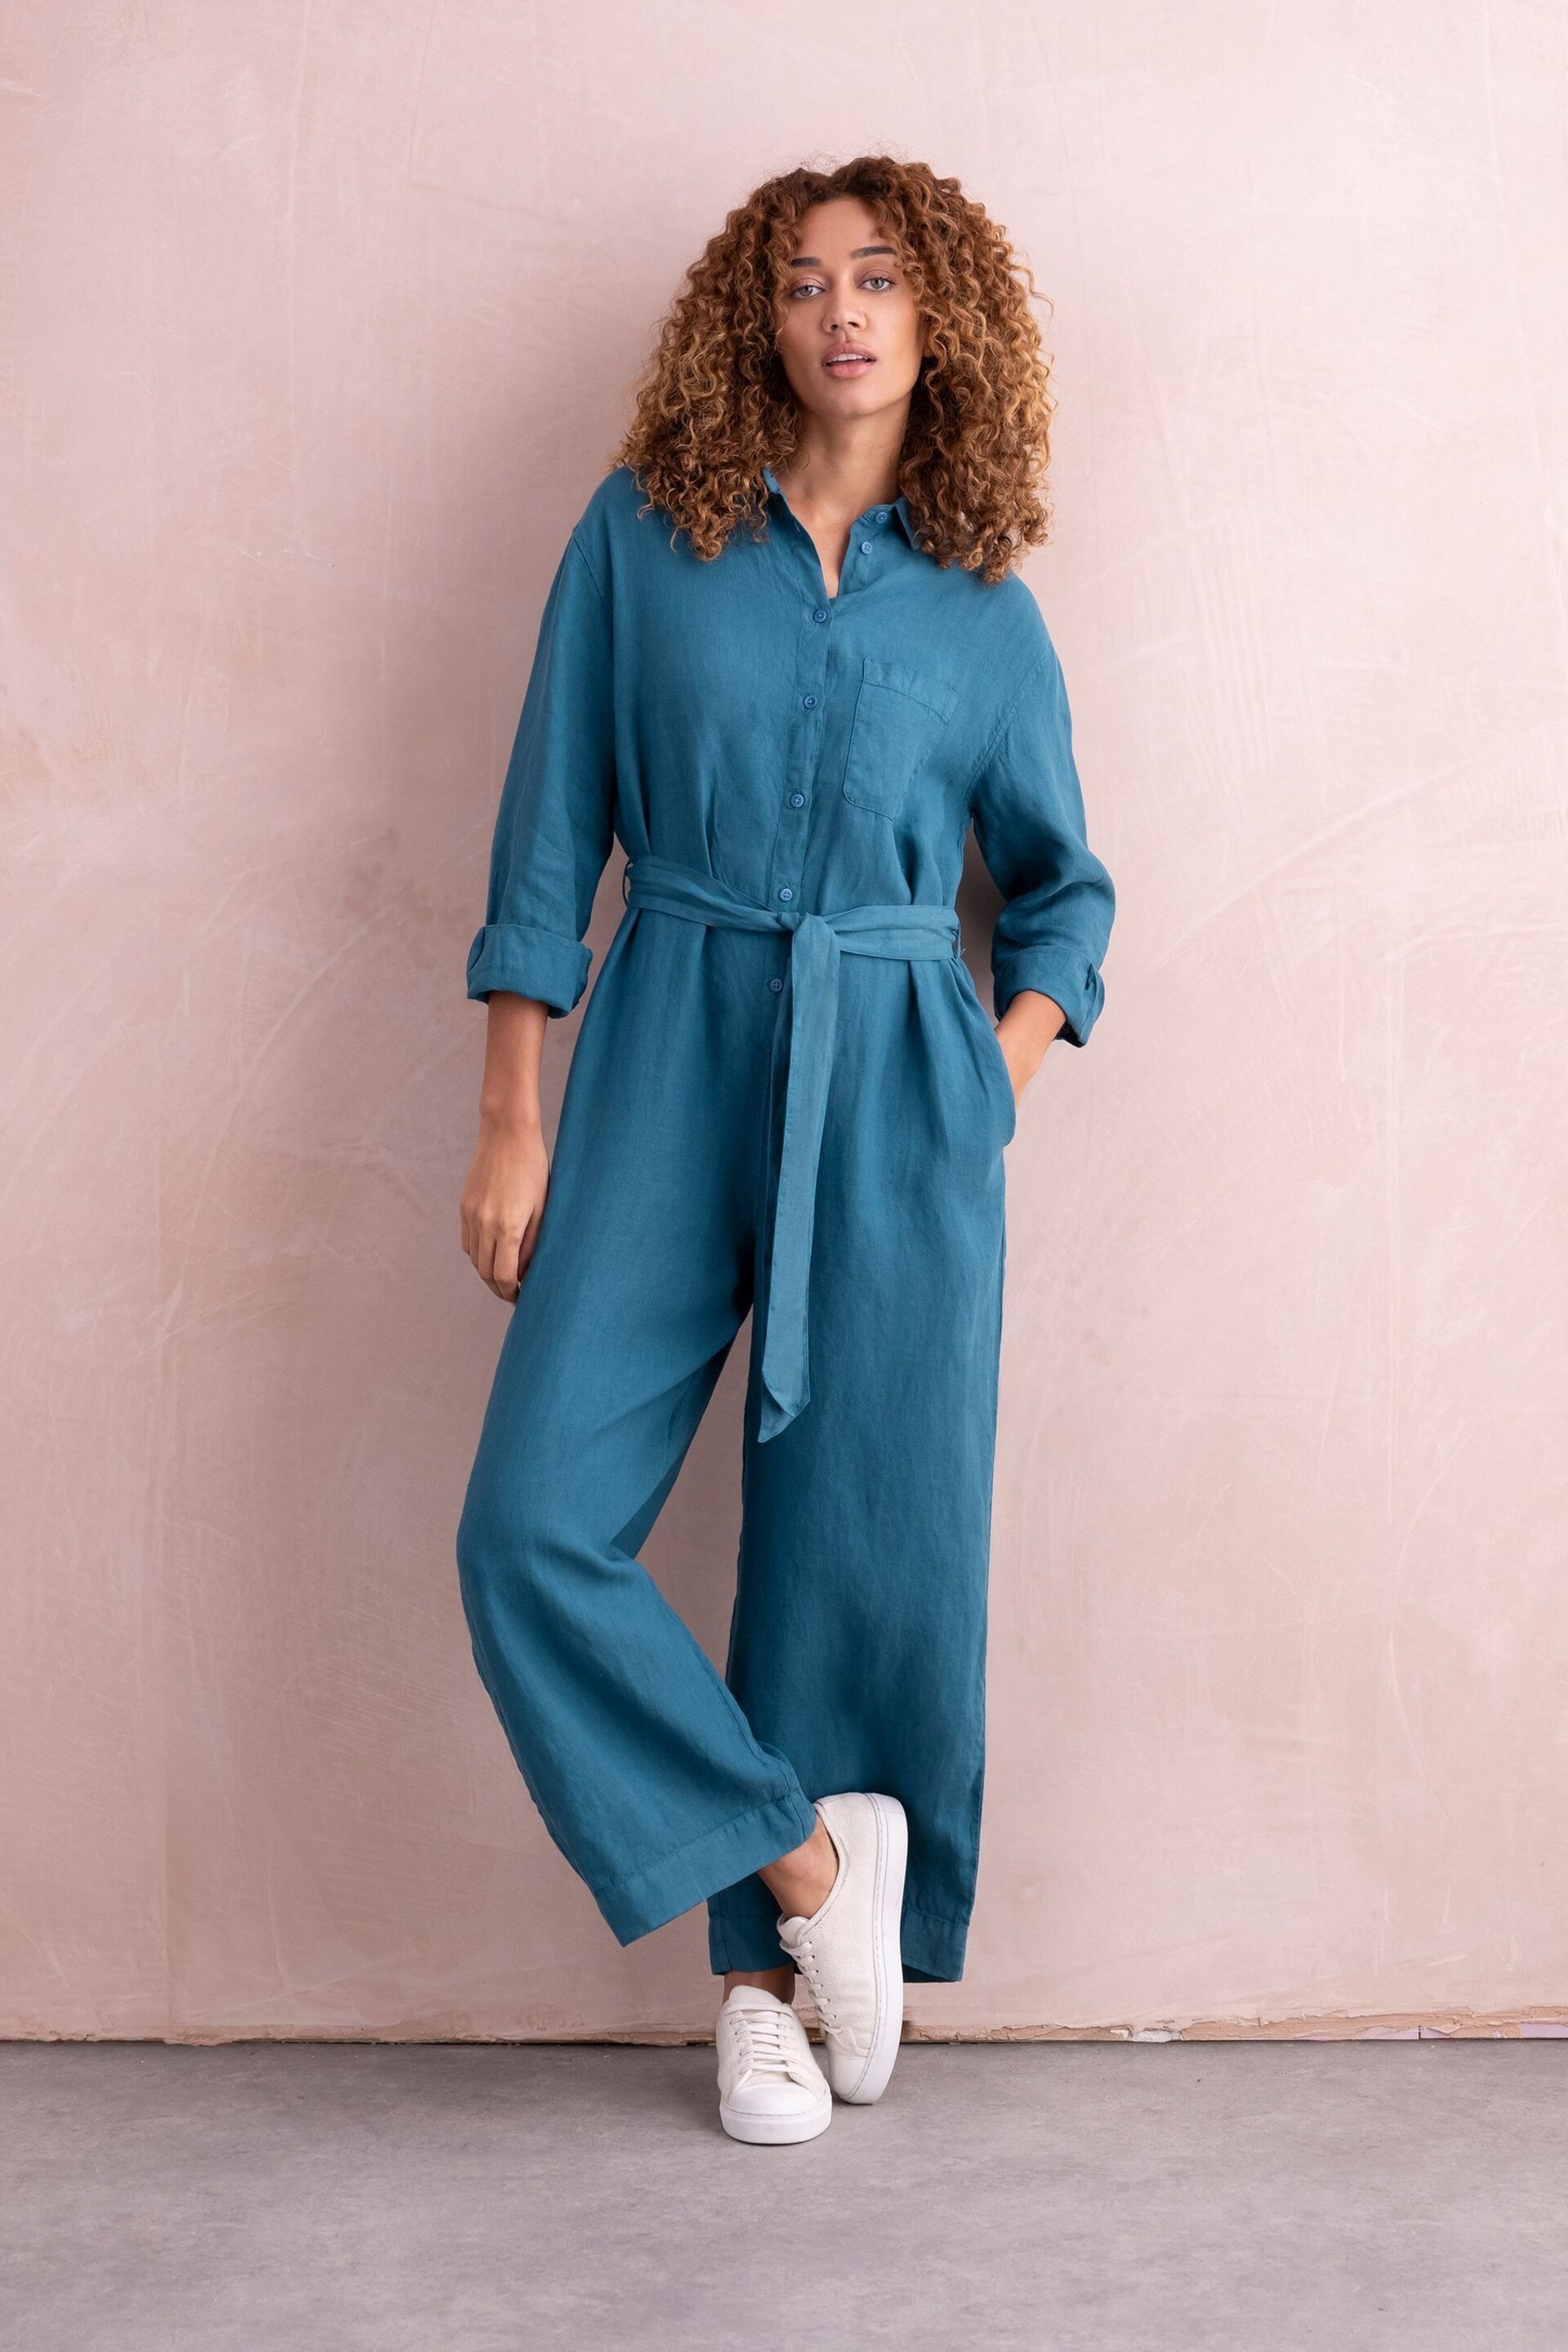 Celtic & Co. Blue Linen Long Sleeve Jumpsuit - Image 1 of 5